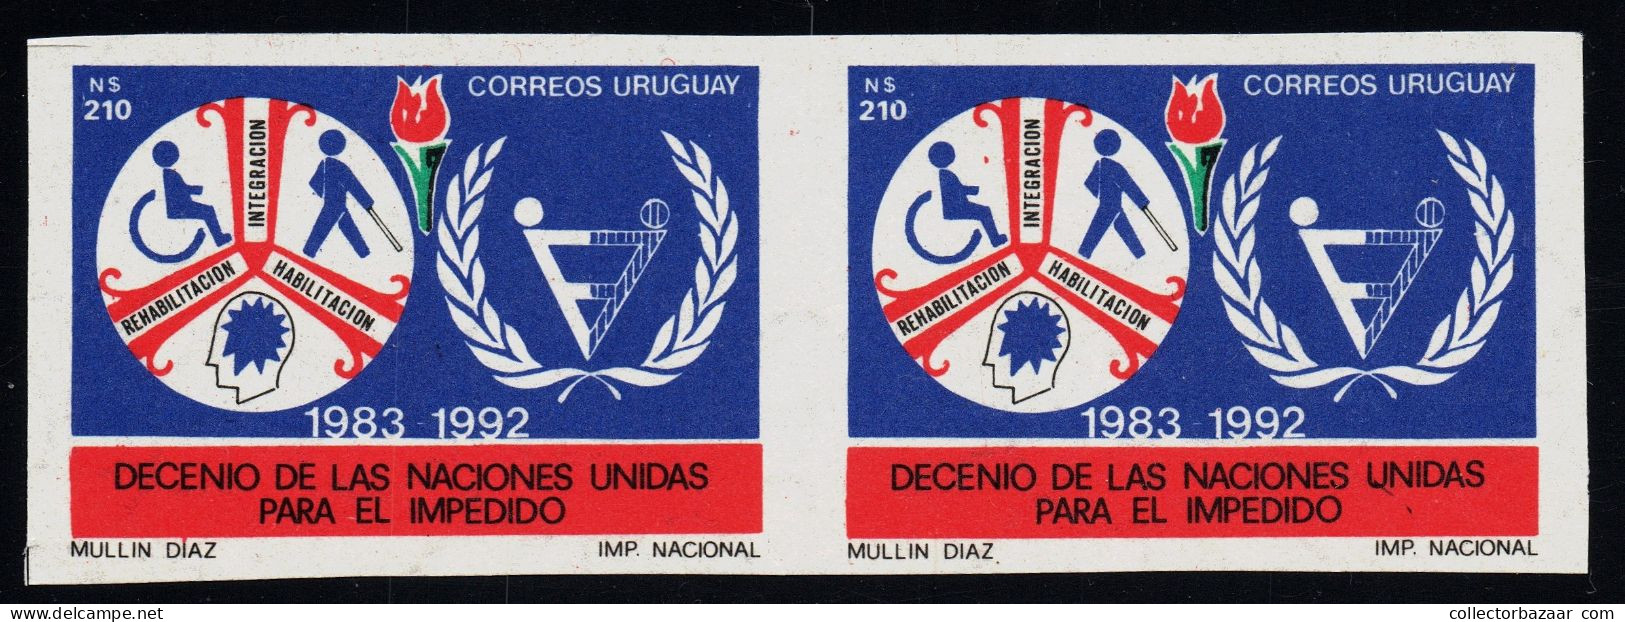 Handicap Menta Disease Blind Wheelchair Uruguay ONU Imperforated Pair MNH - Behinderungen